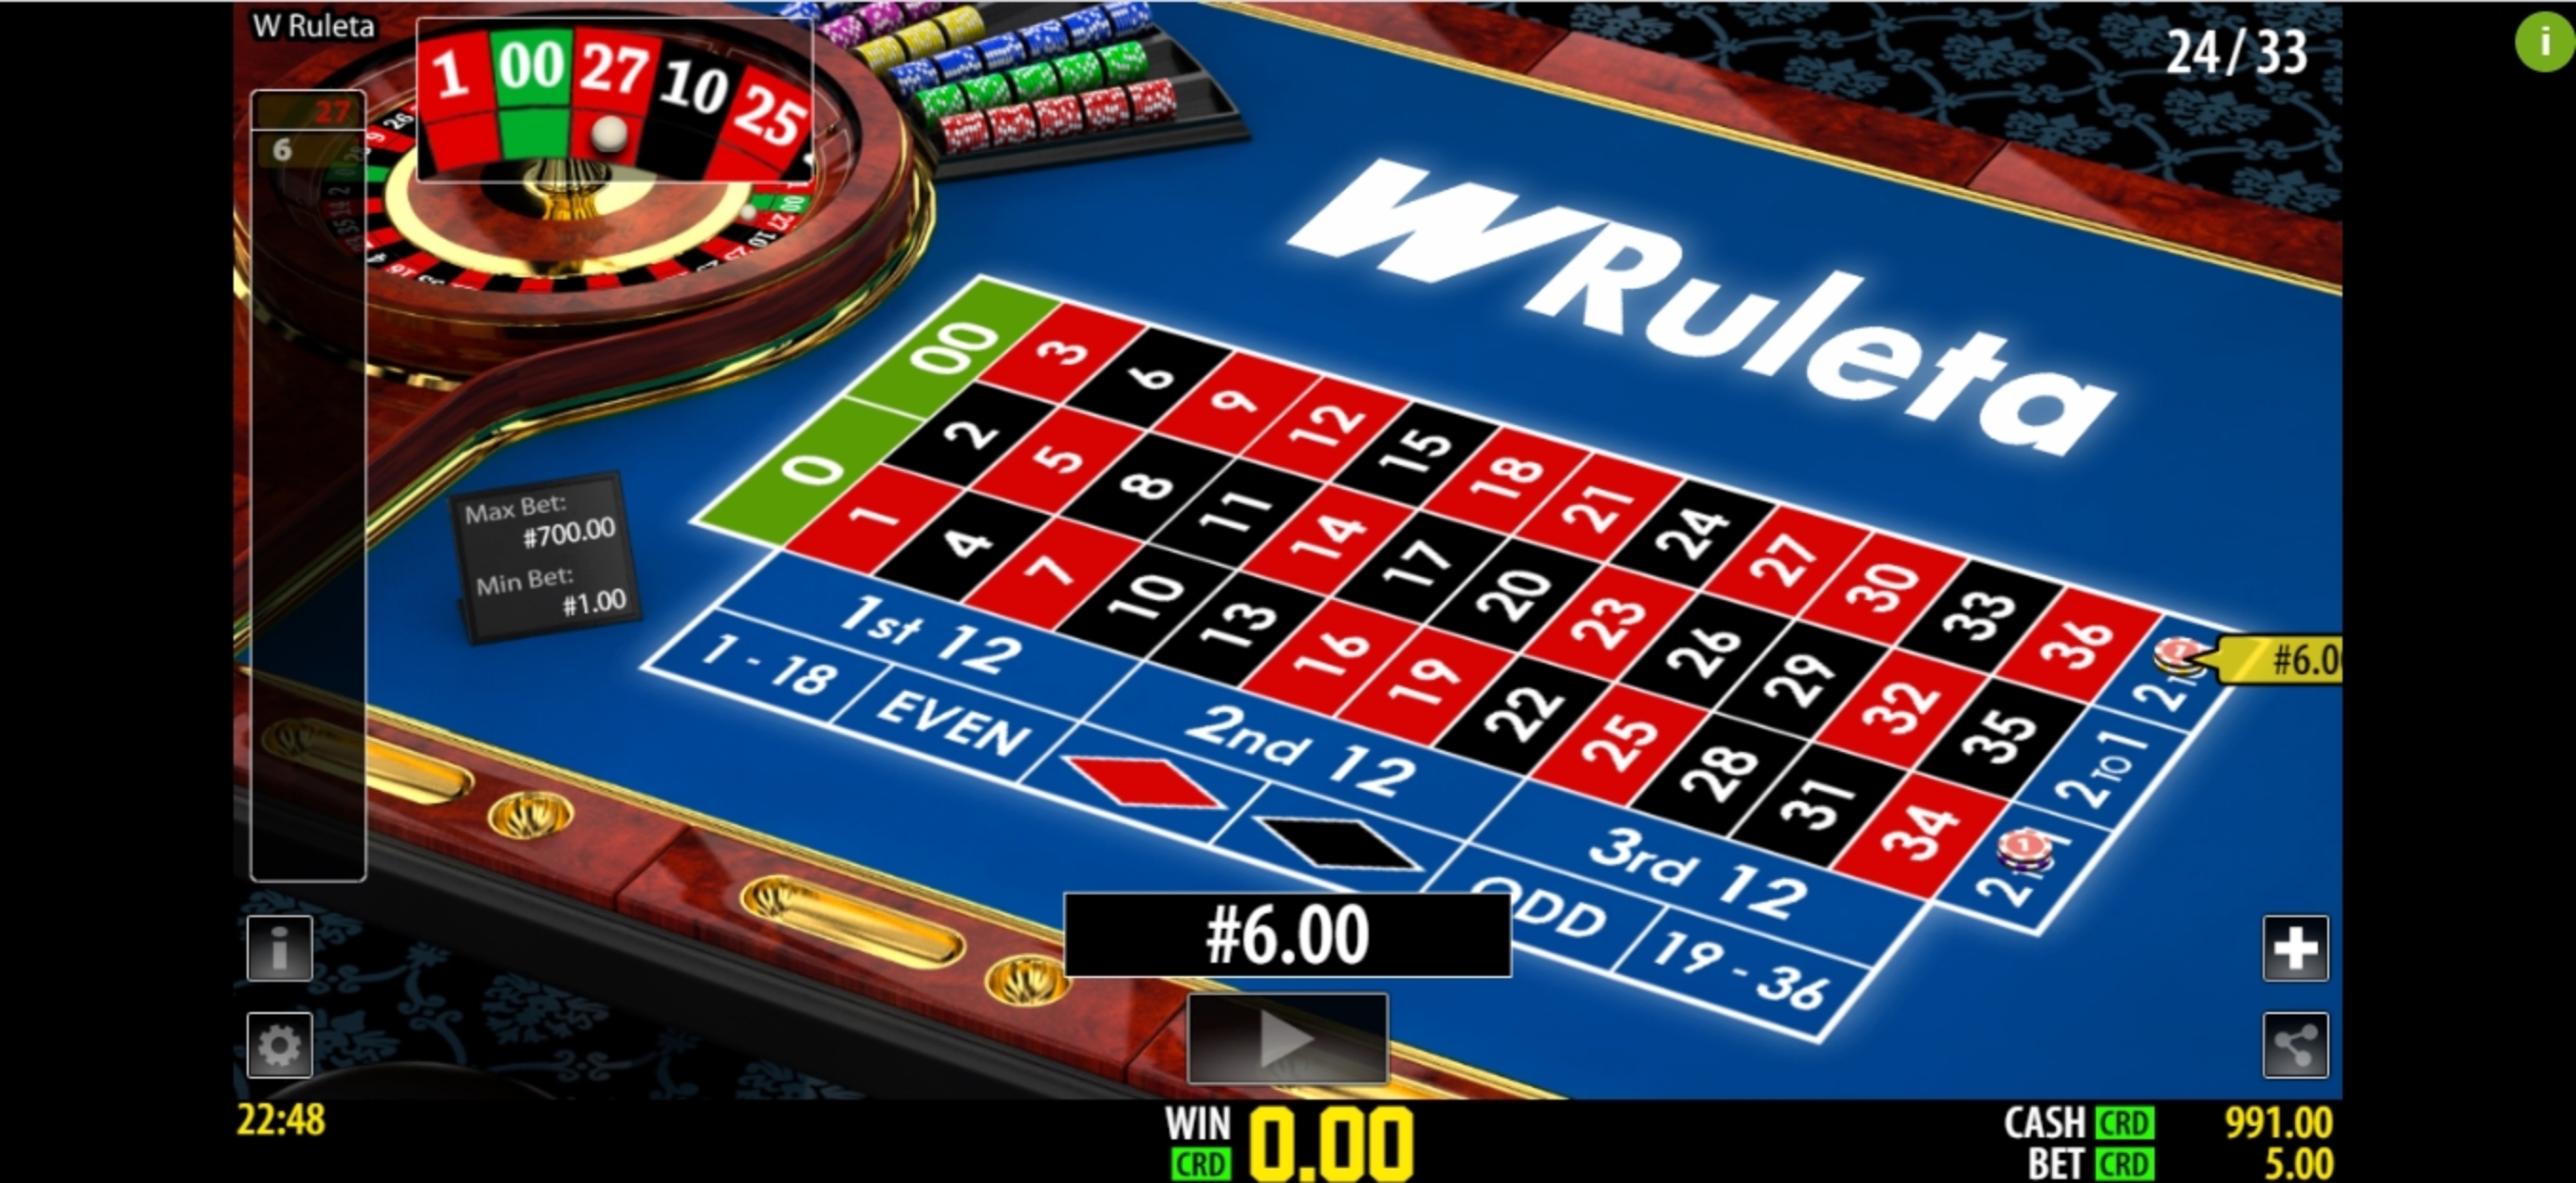 Win Money in WRuleta Pro Free Slot Game by World Match